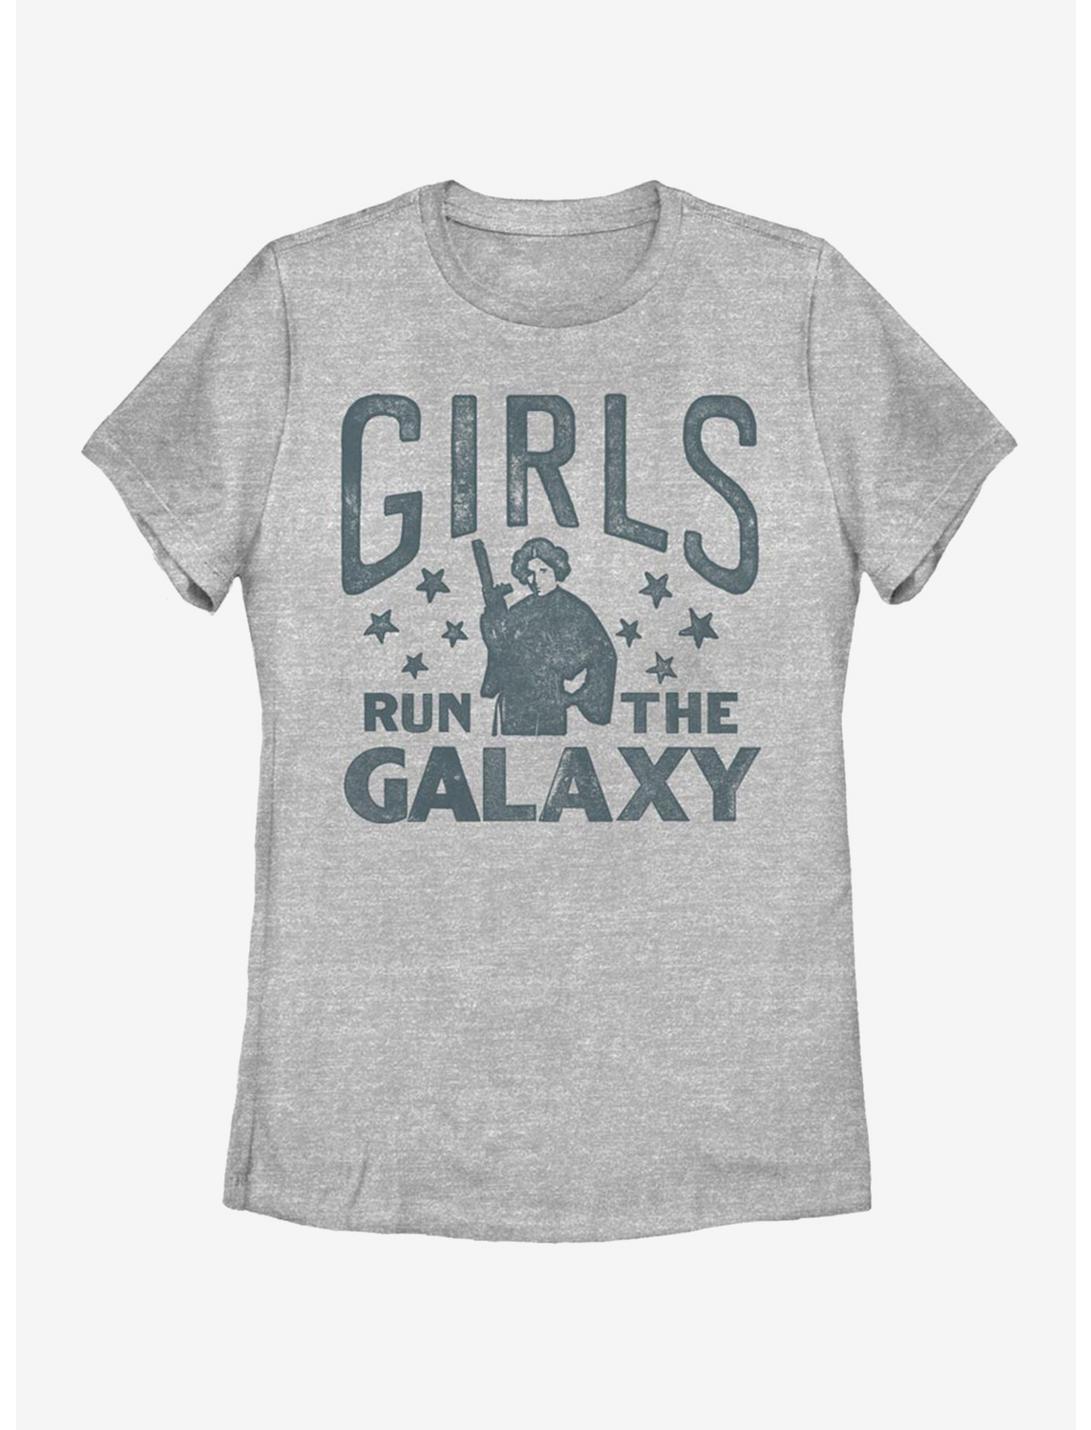 Star Wars Girls Run The Galaxy Womens T-Shirt, ATH HTR, hi-res